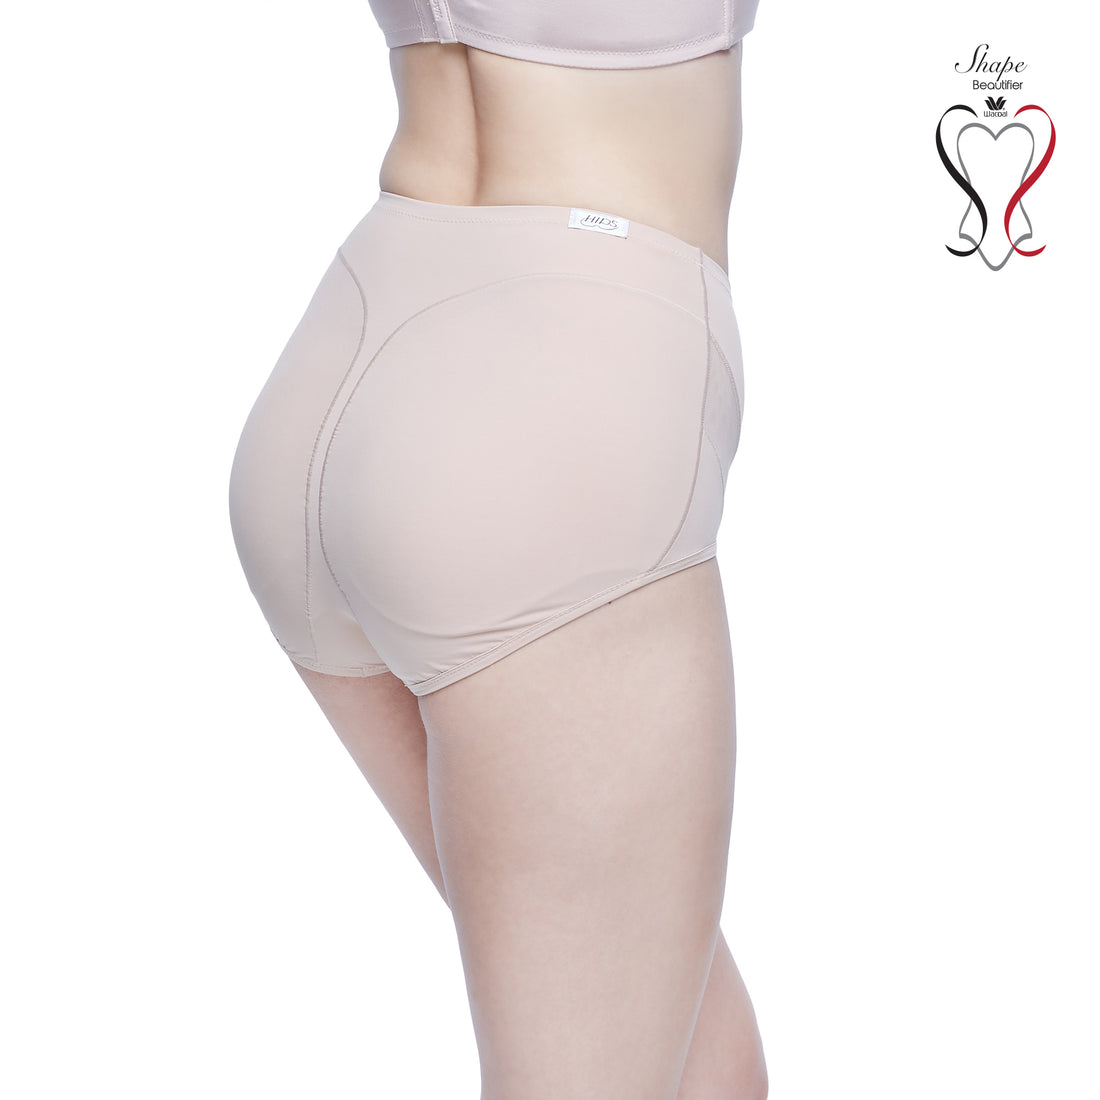 Wacoal Shape Beautifier Hip กางเกงเก็บกระชับ รุ่น WY1181 สีเบจ (BE)